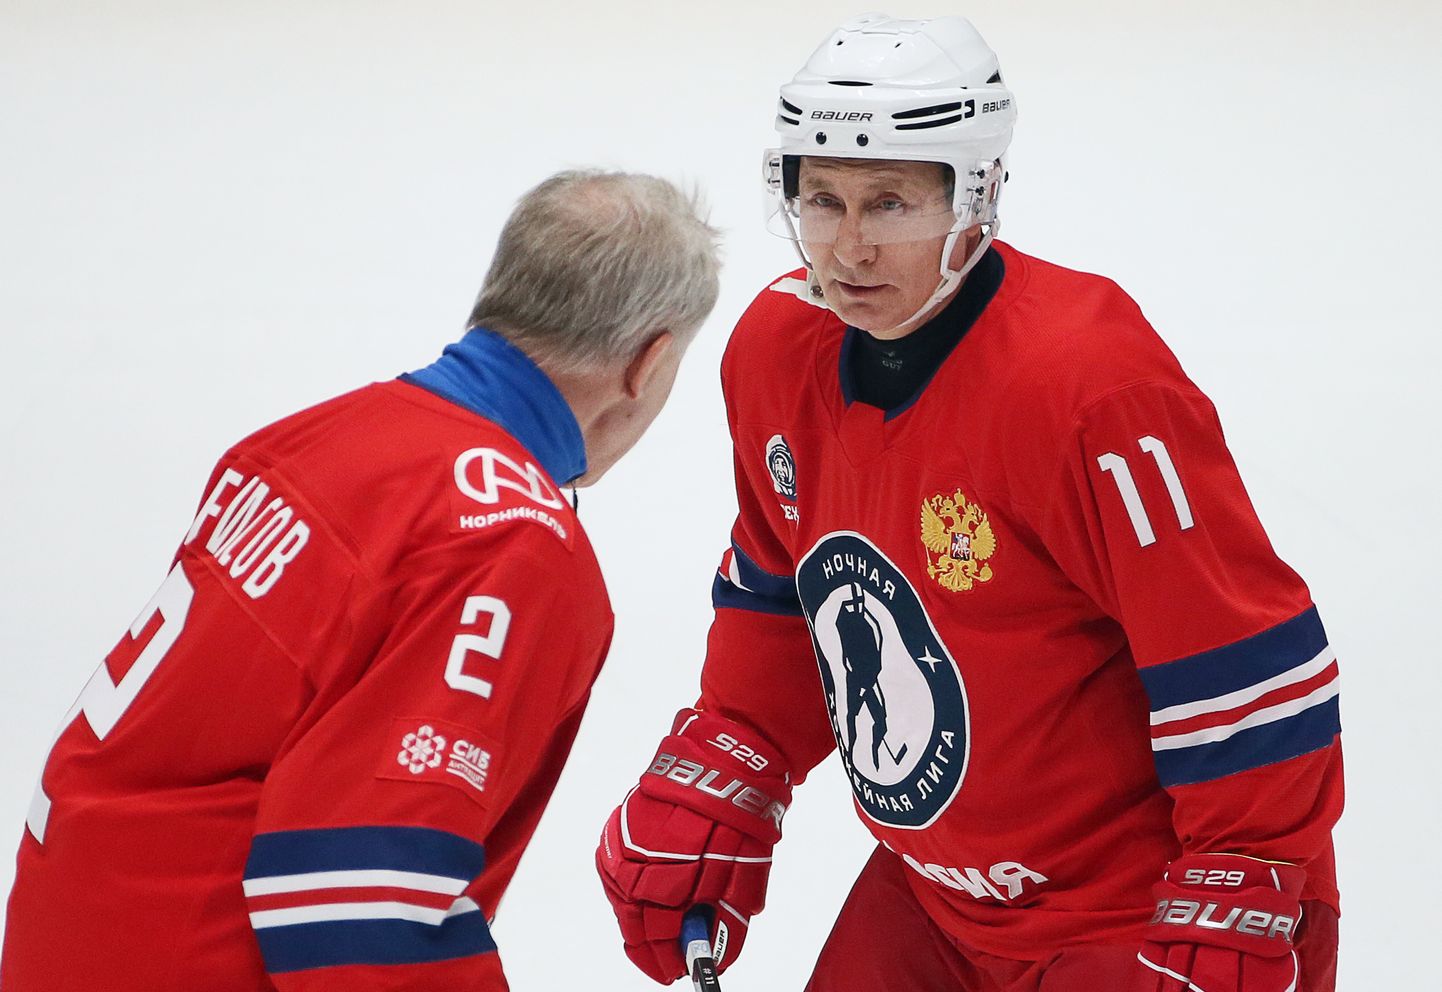 Вячеслав Фетисов (слева) и Вадимир Путин (справа). Ночная хоккейная лига, Сочи 2021 год.